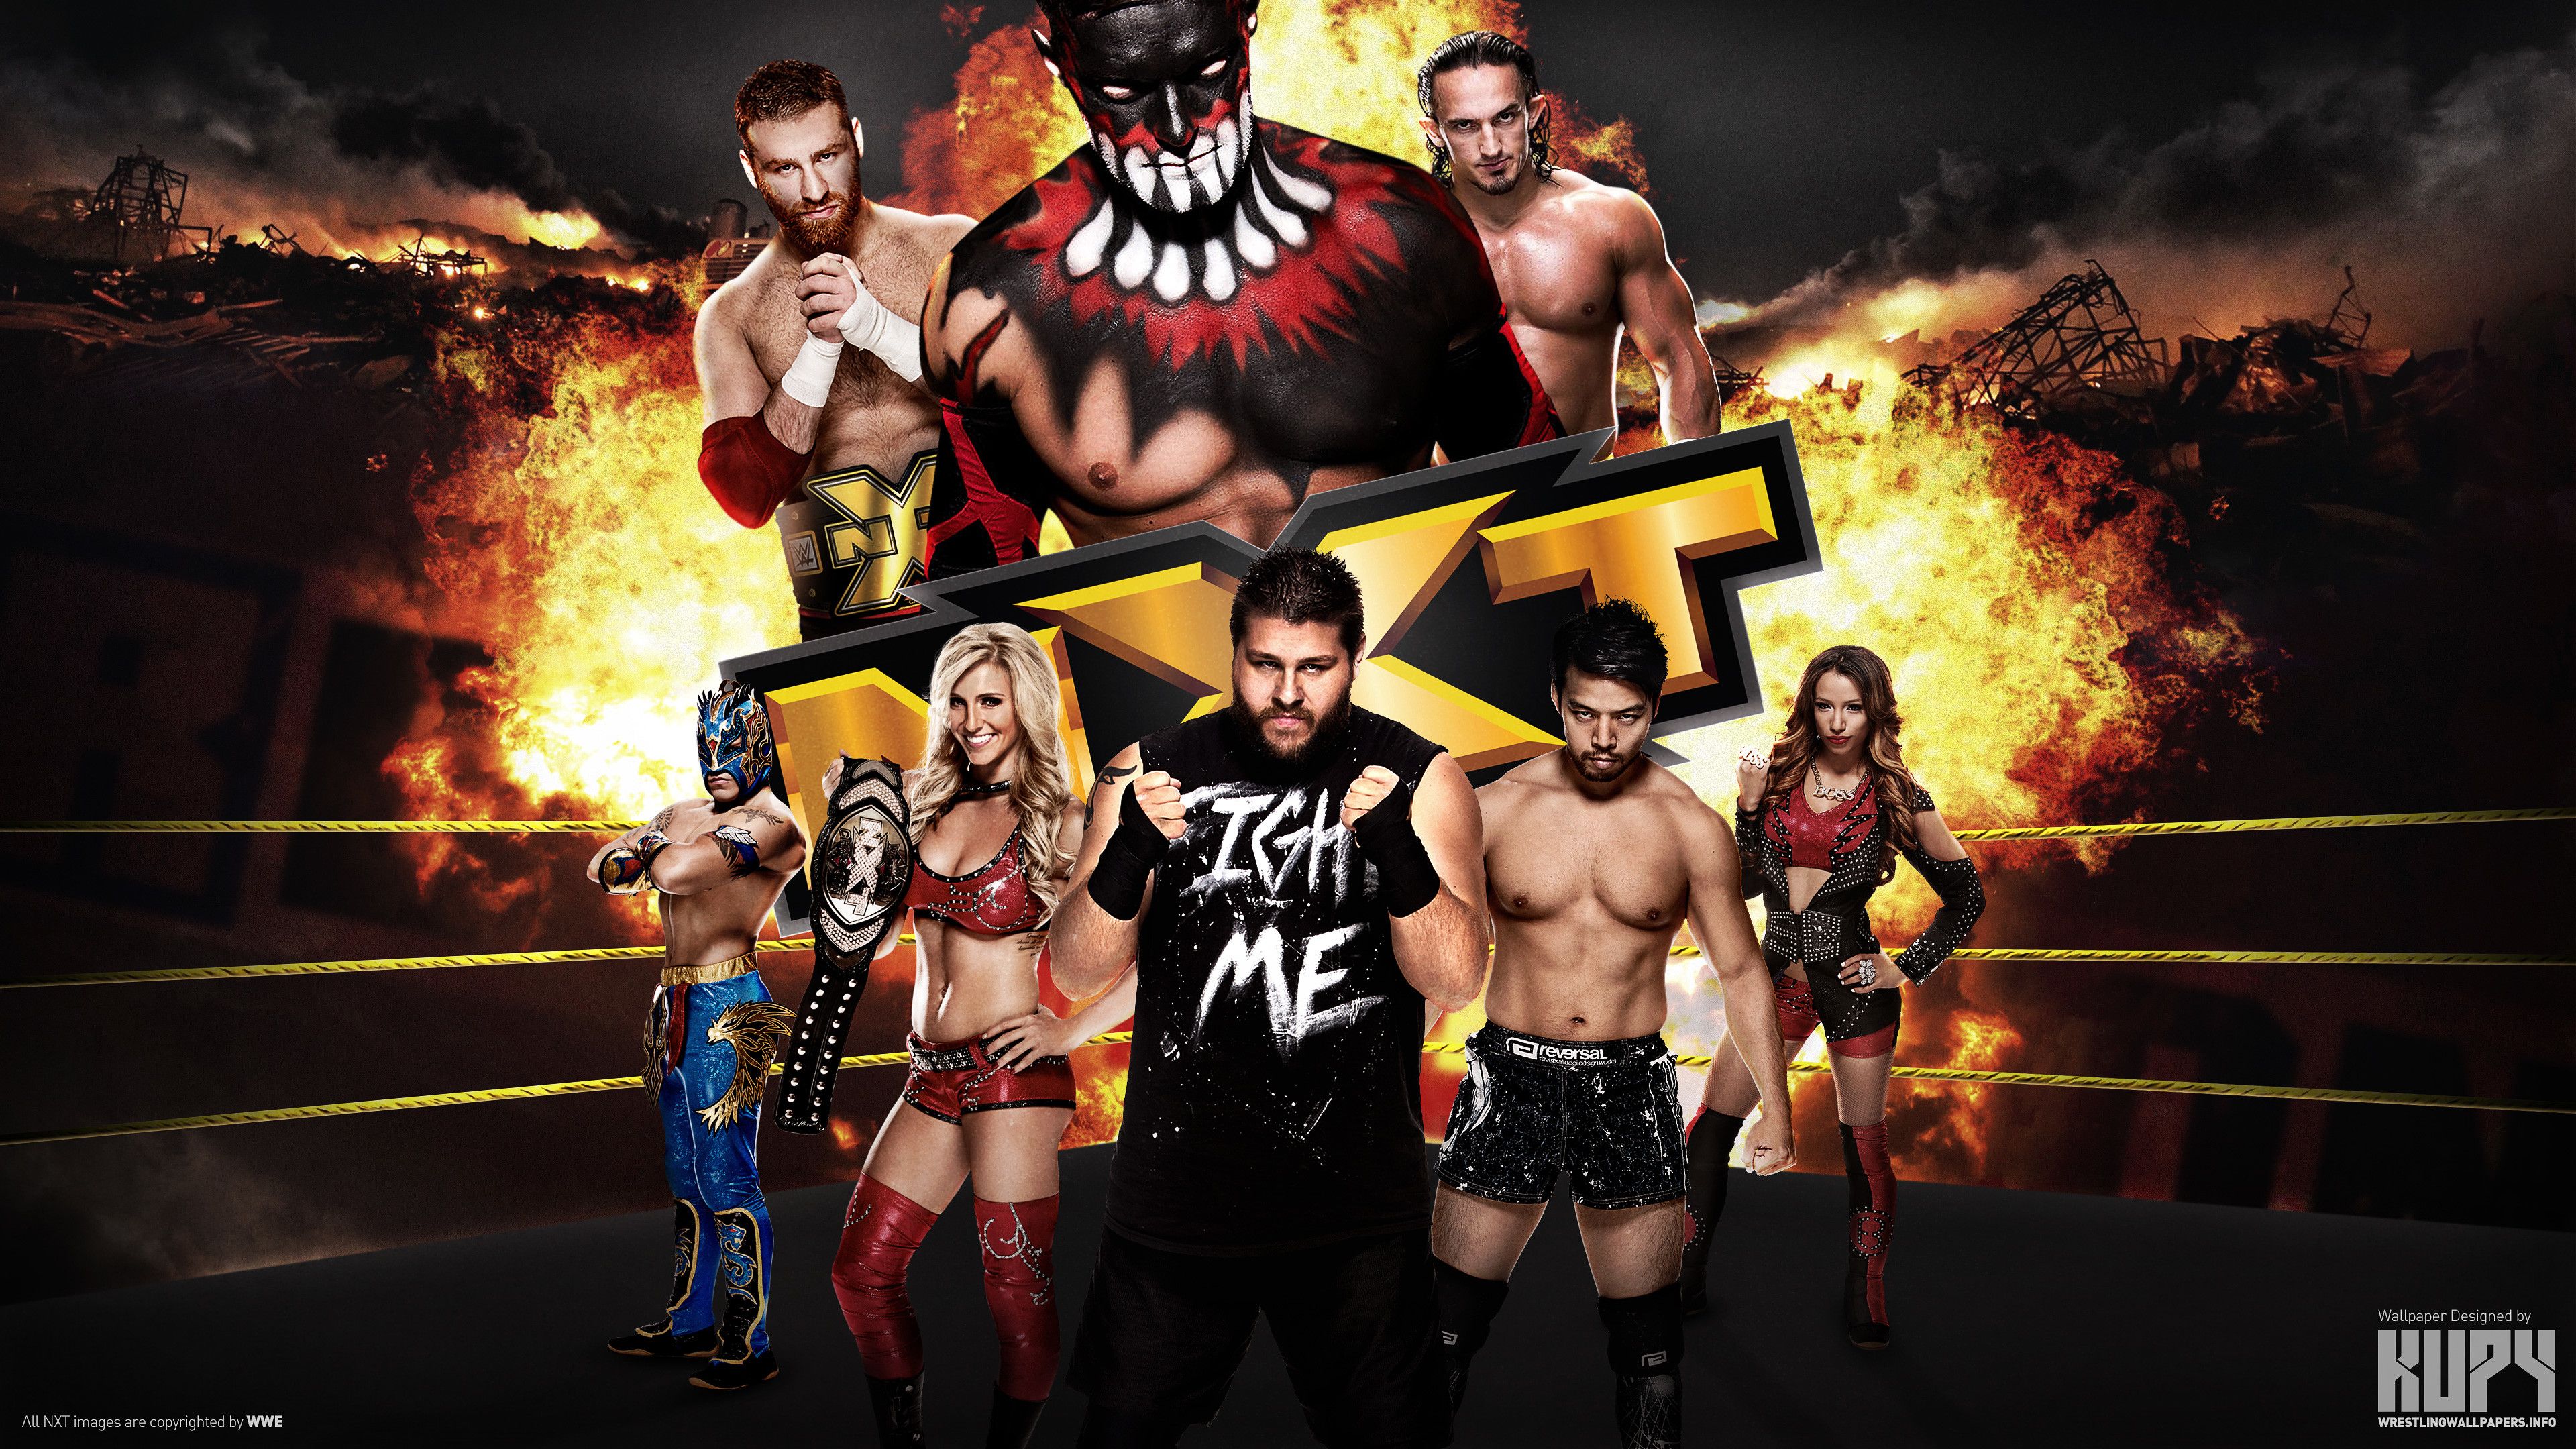 Wallpaper of WWE Raw